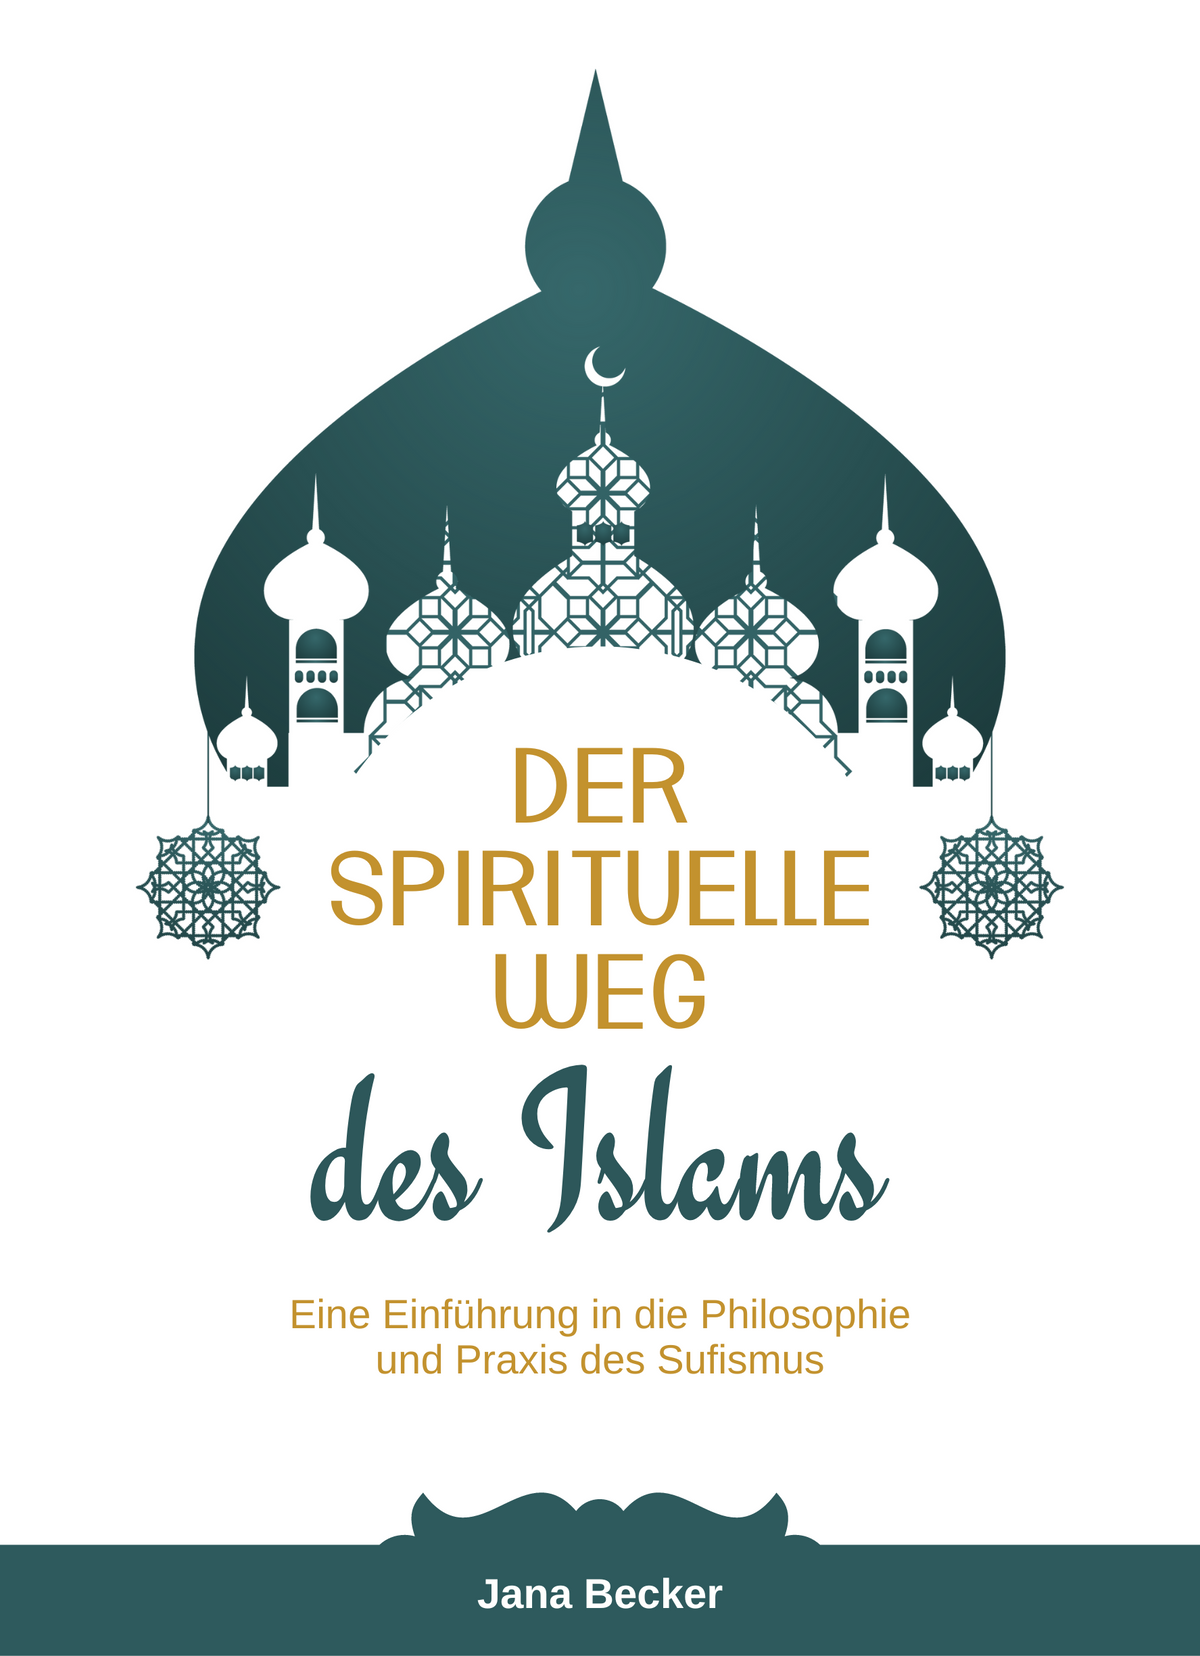 Der spirituelle Weg des Islams